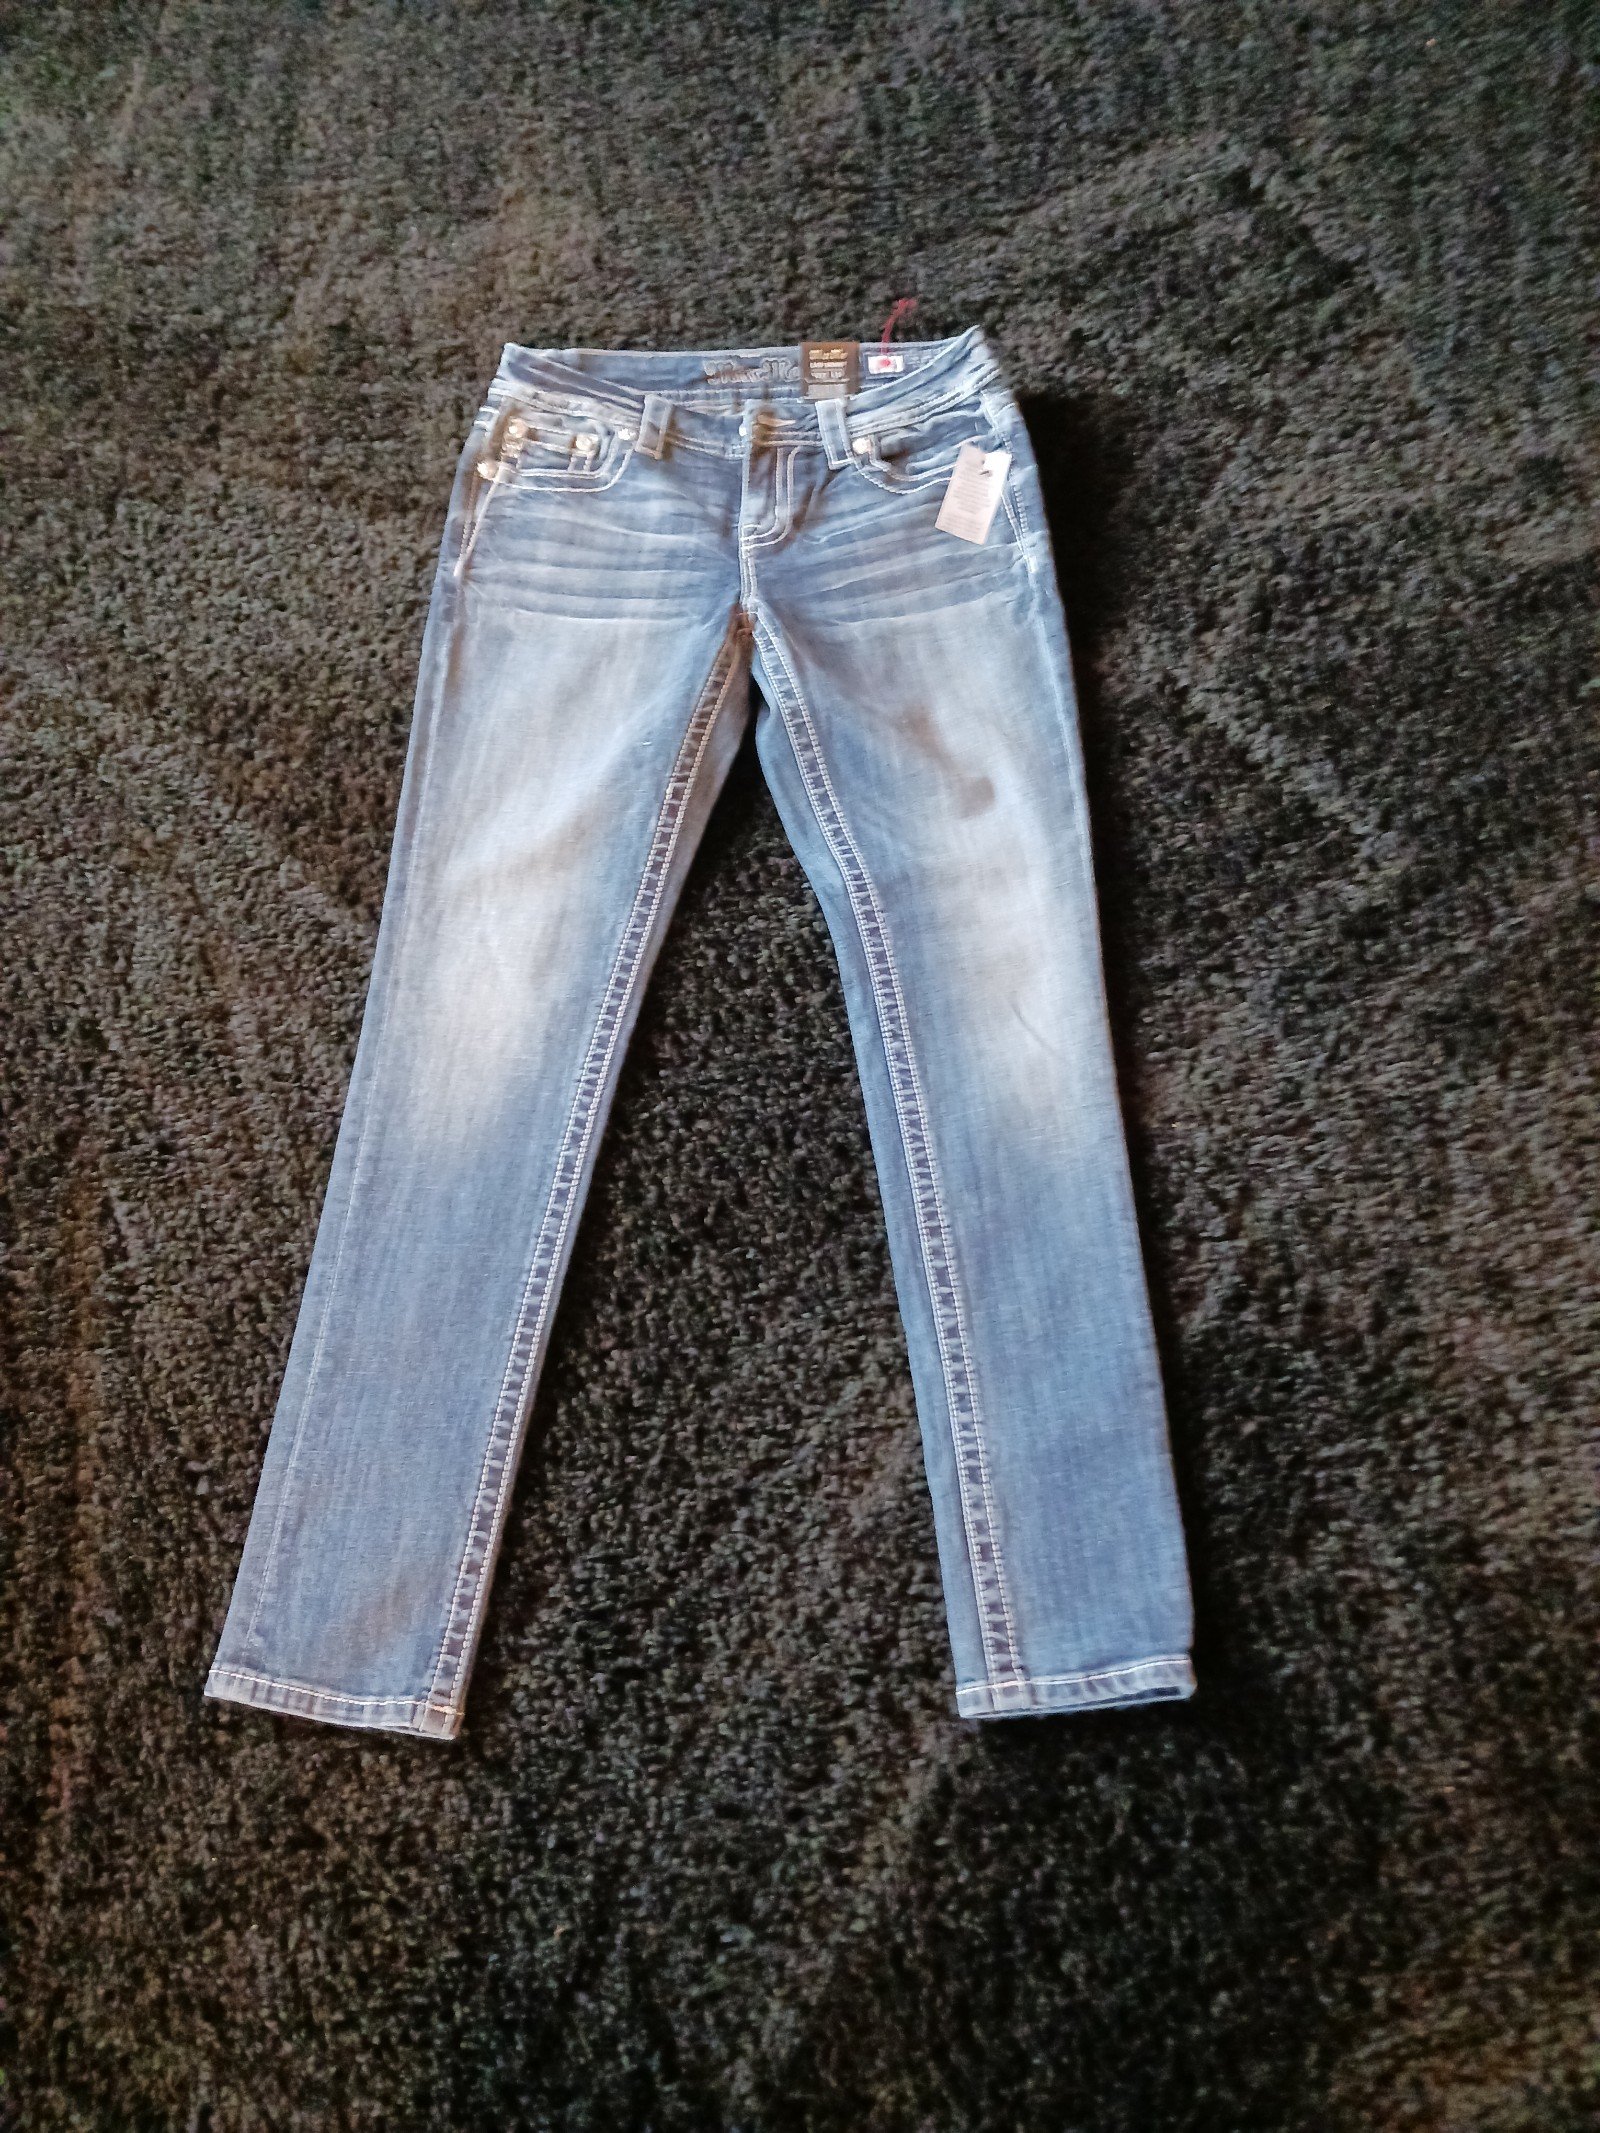 Factory Direct  Miss Me jeans size 27 pCJp2hki7 Hot Sale